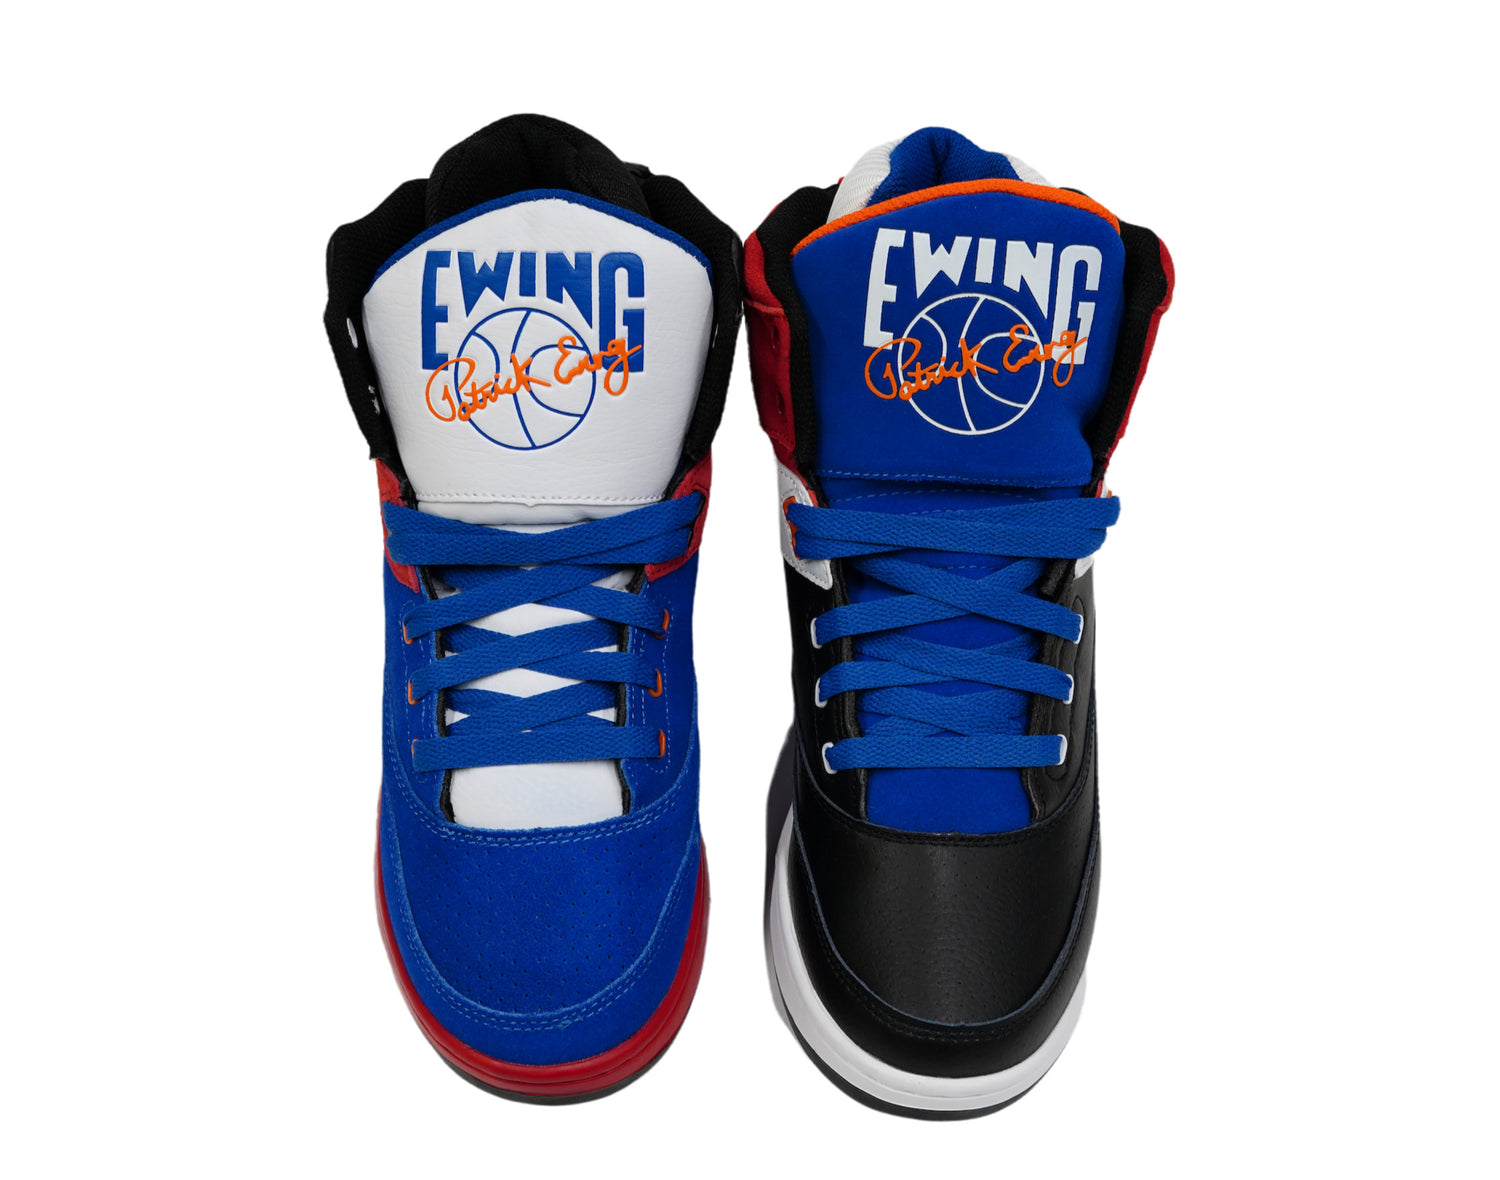 Ewing Athletics Ewing 33 Hi Core 4 Men's Basketball Shoes